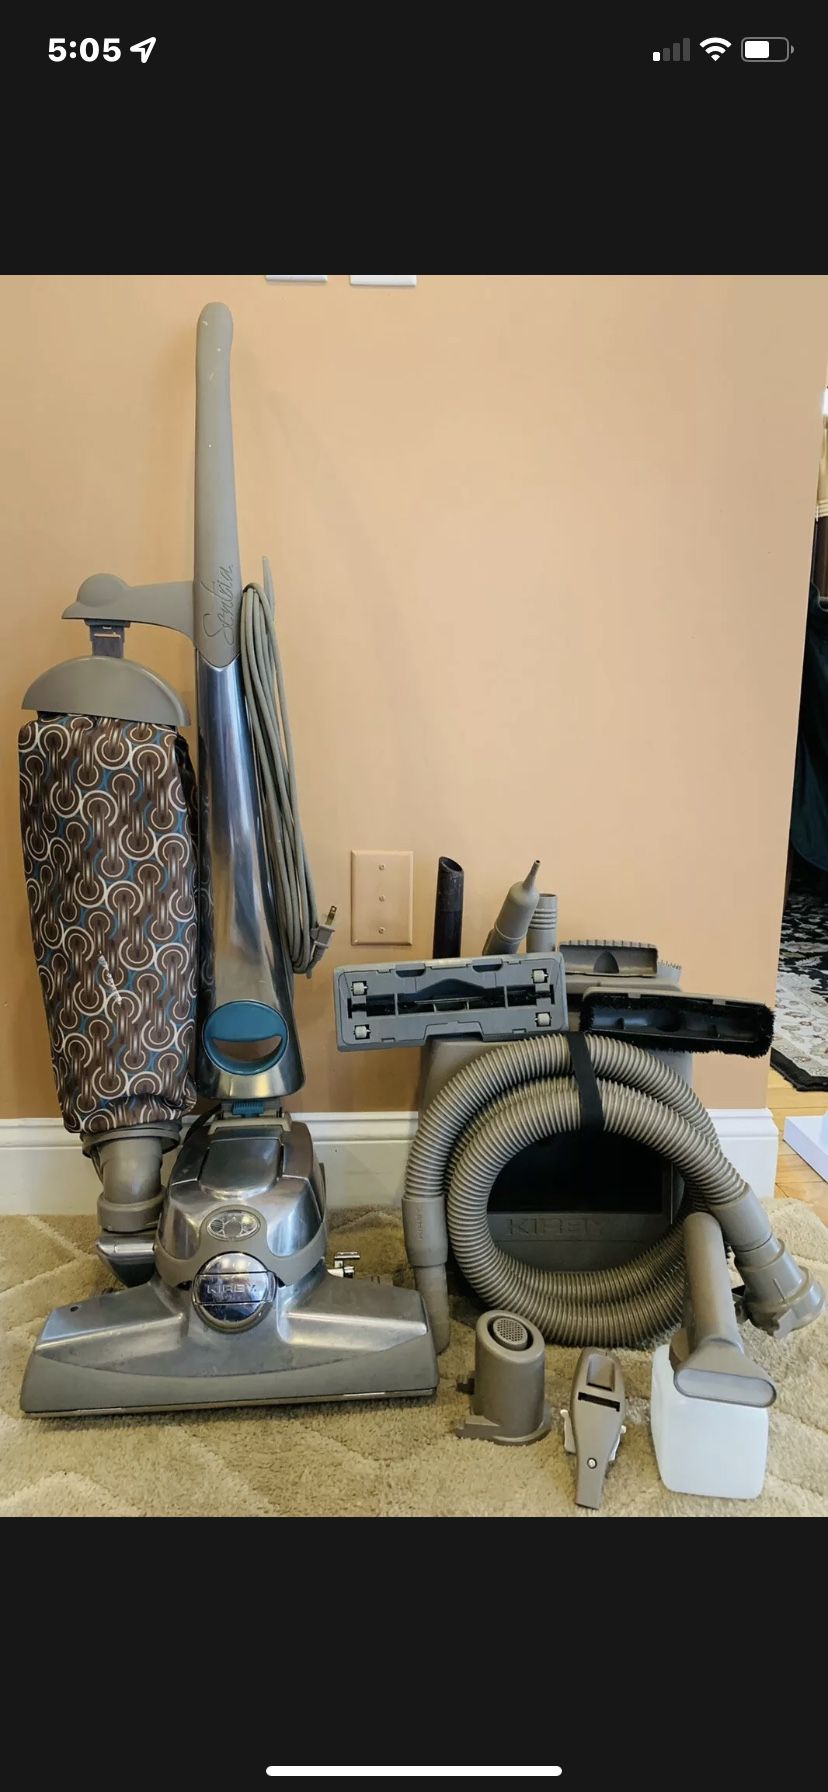 Kirby Sentria 2 vacuum cleaner